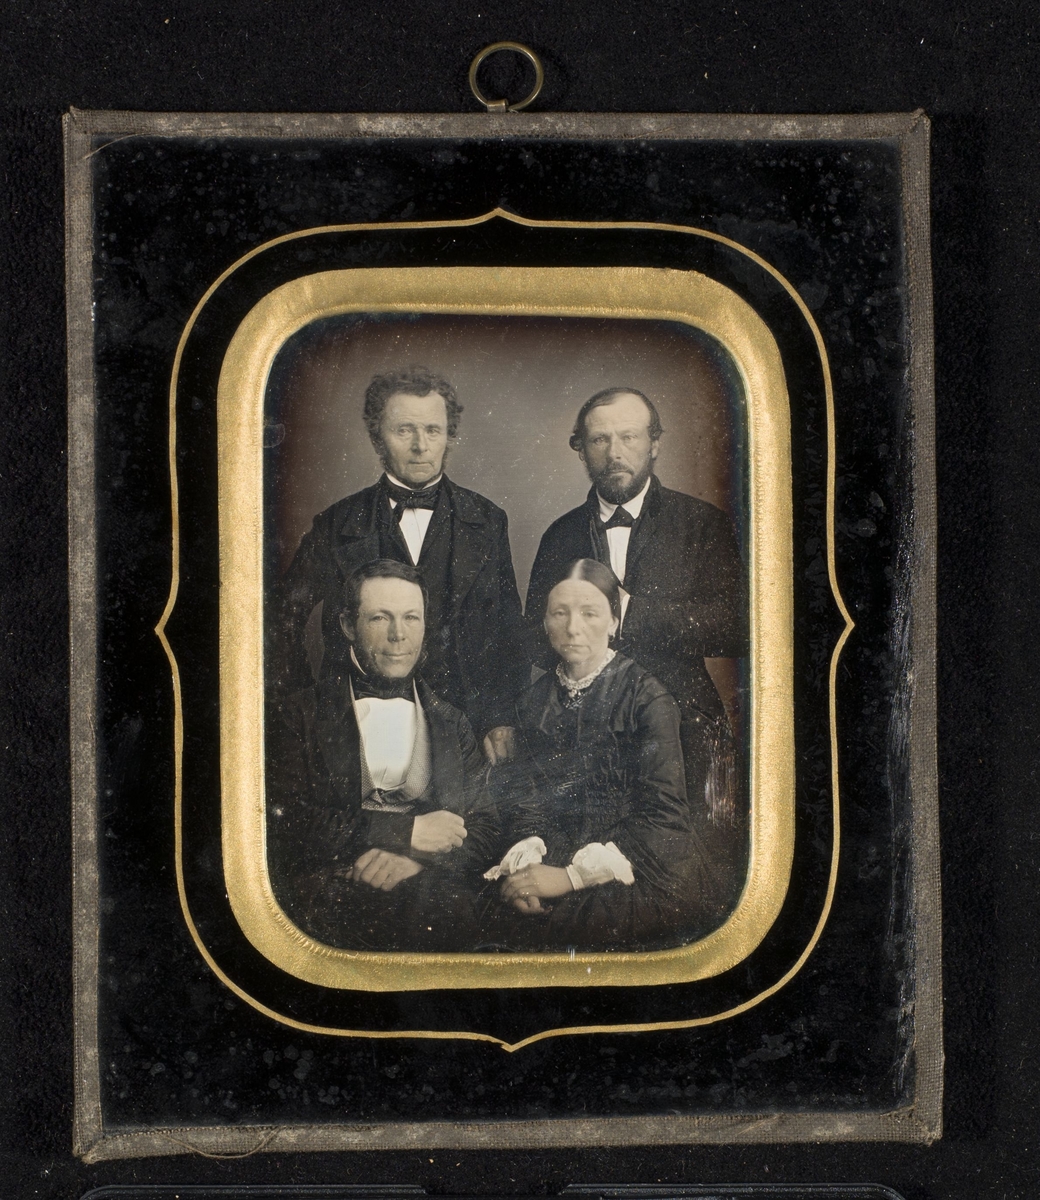 Daguerreotypi av tre søsken og deres onkel.
Bak f.v.: Johan Konow (1791-1868), Tønnes Rolfsen (1815-1882)
Foran: Rasmus Rolfsen (f. 1811) og Anna Hedevig Rolfsen (f. 1812).